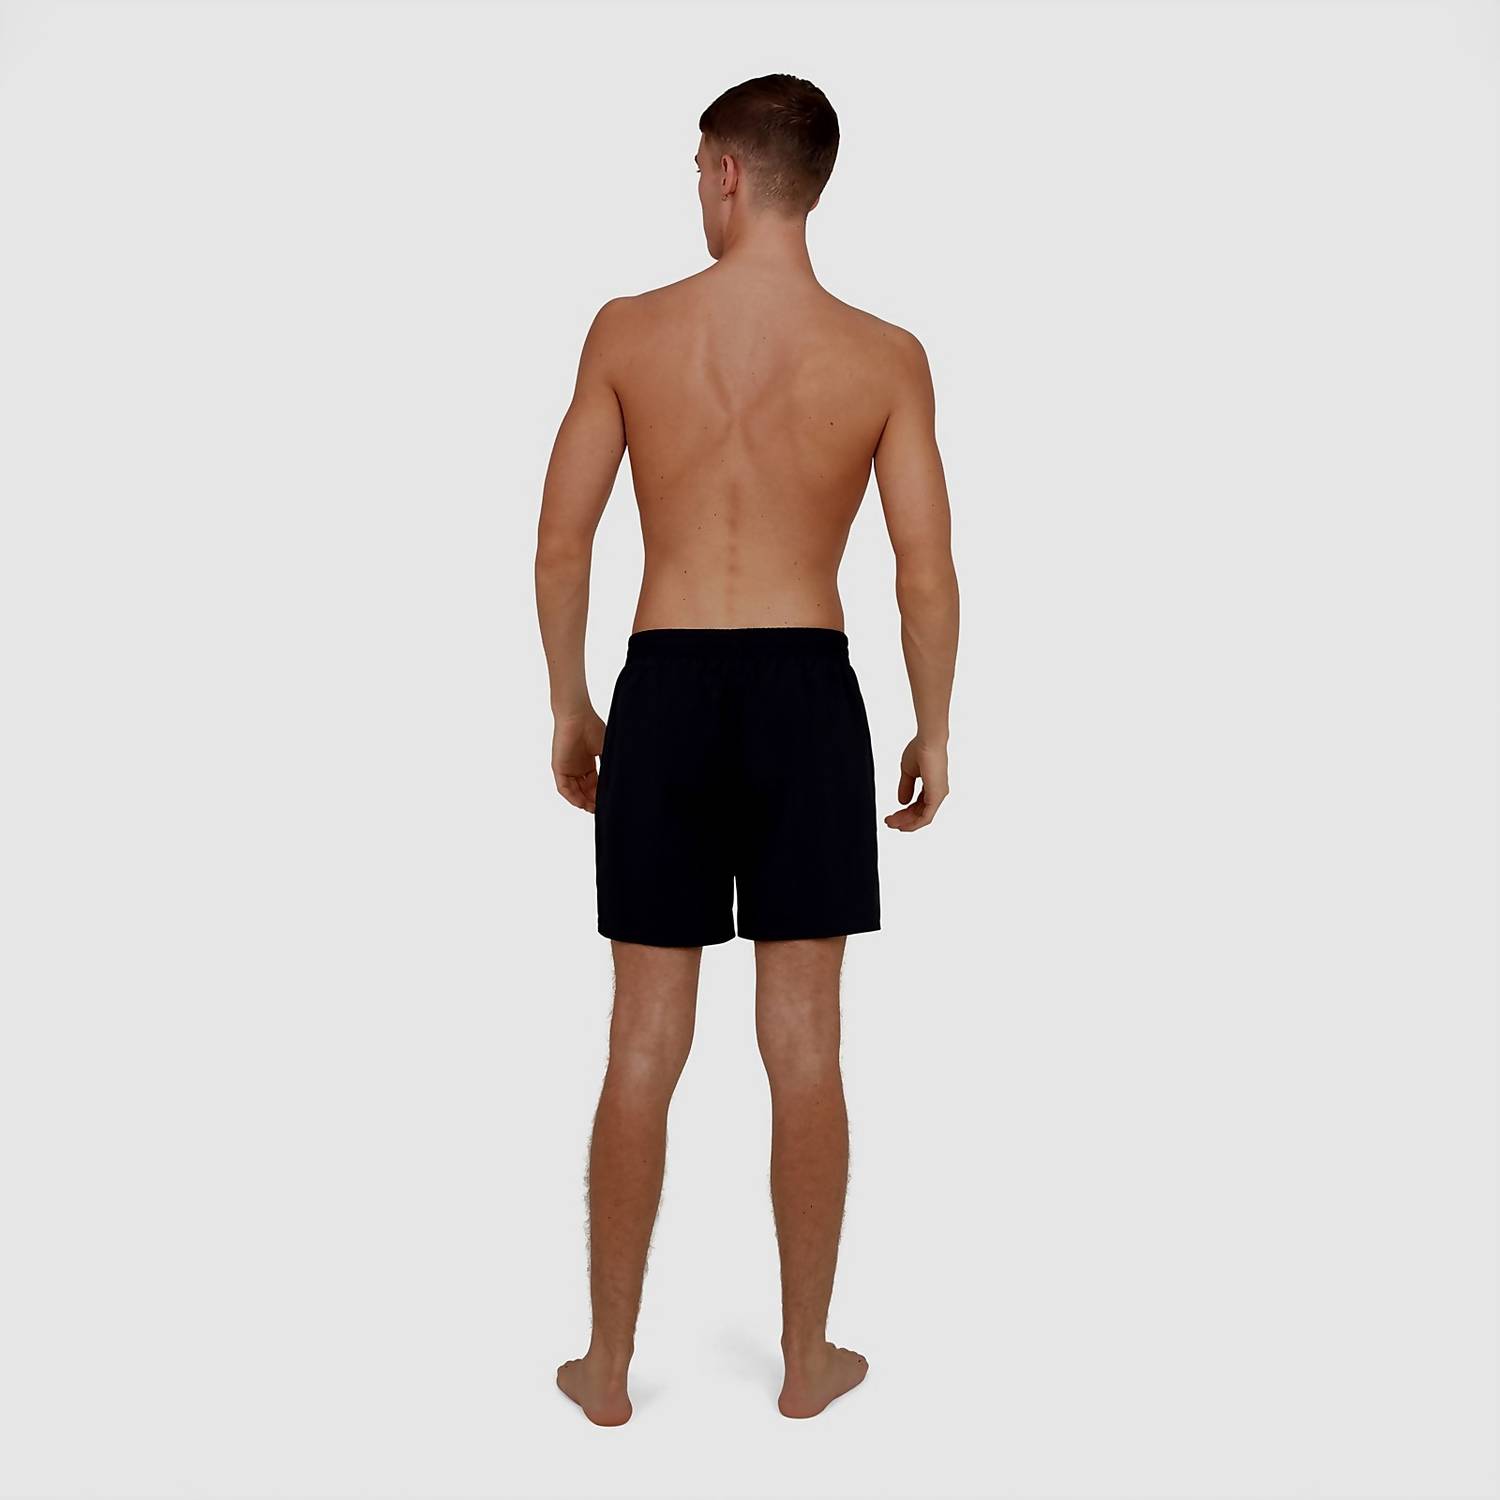 Hommes Short De Bain Homme Essential 40 Cm Noir Shorts De Bain Speedo – 1